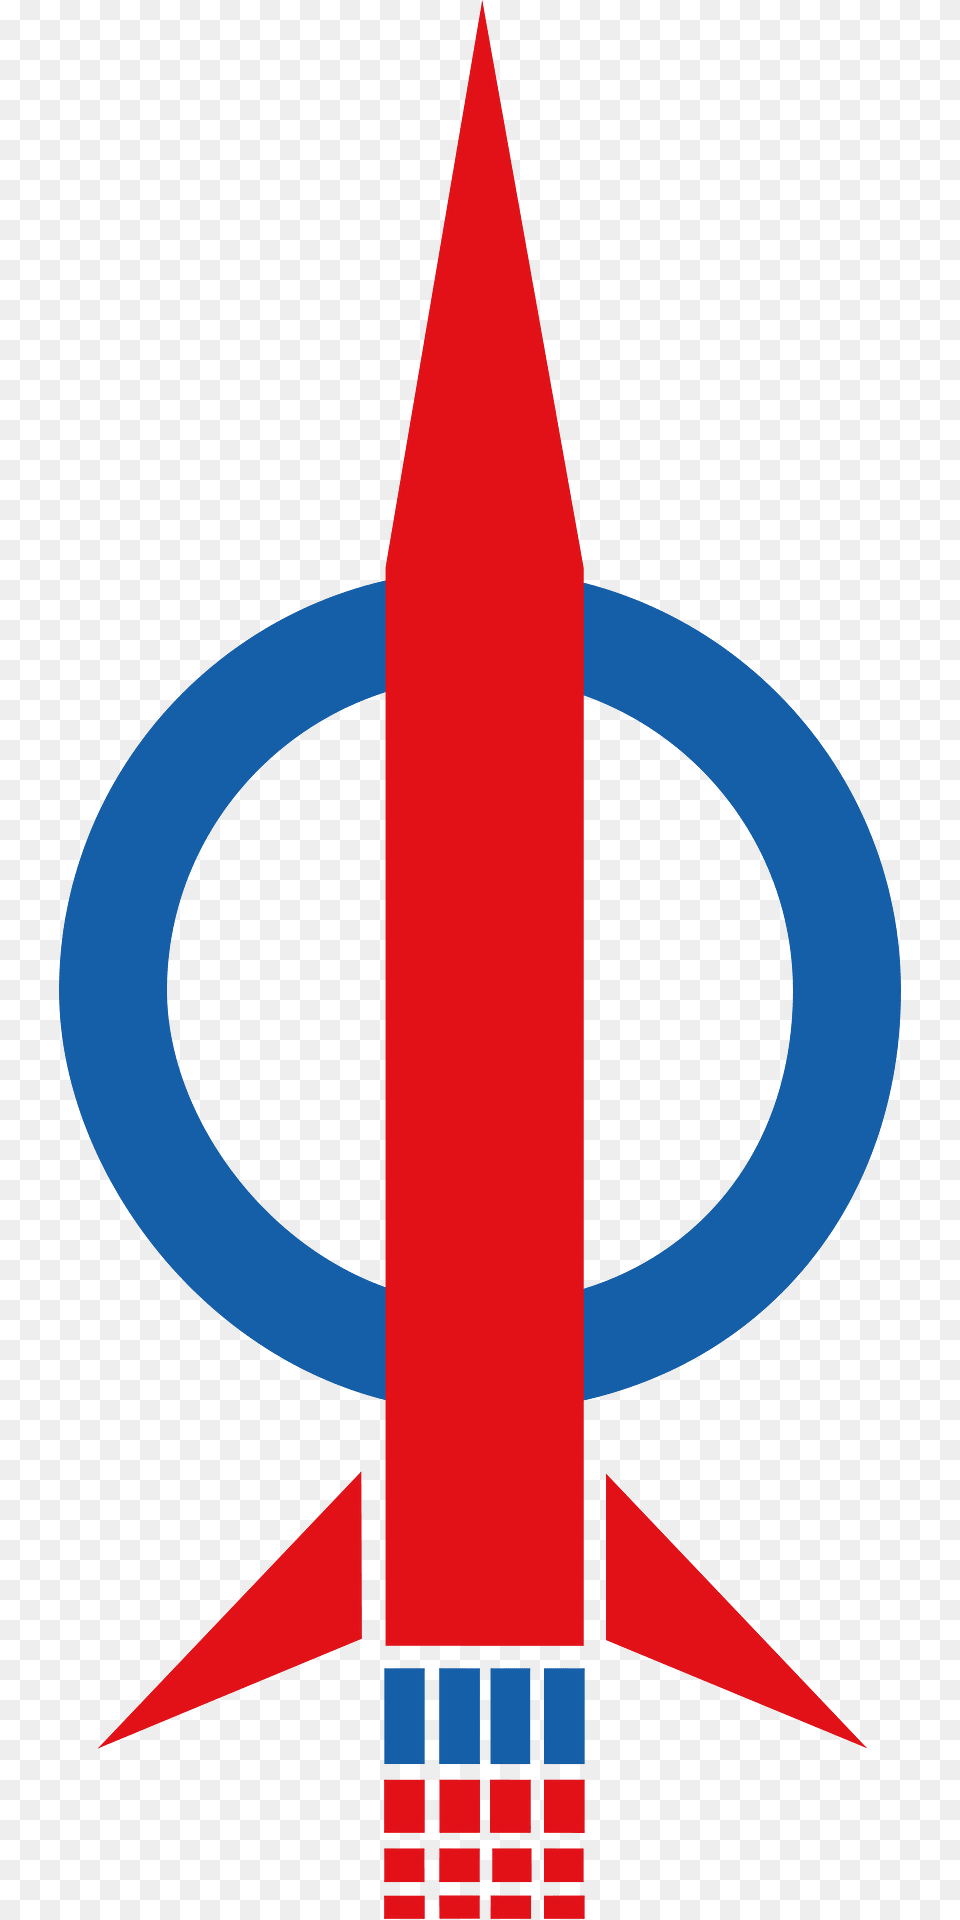 Democratic Action Party Logo Clipart, Ammunition, Missile, Weapon, Rocket Free Transparent Png